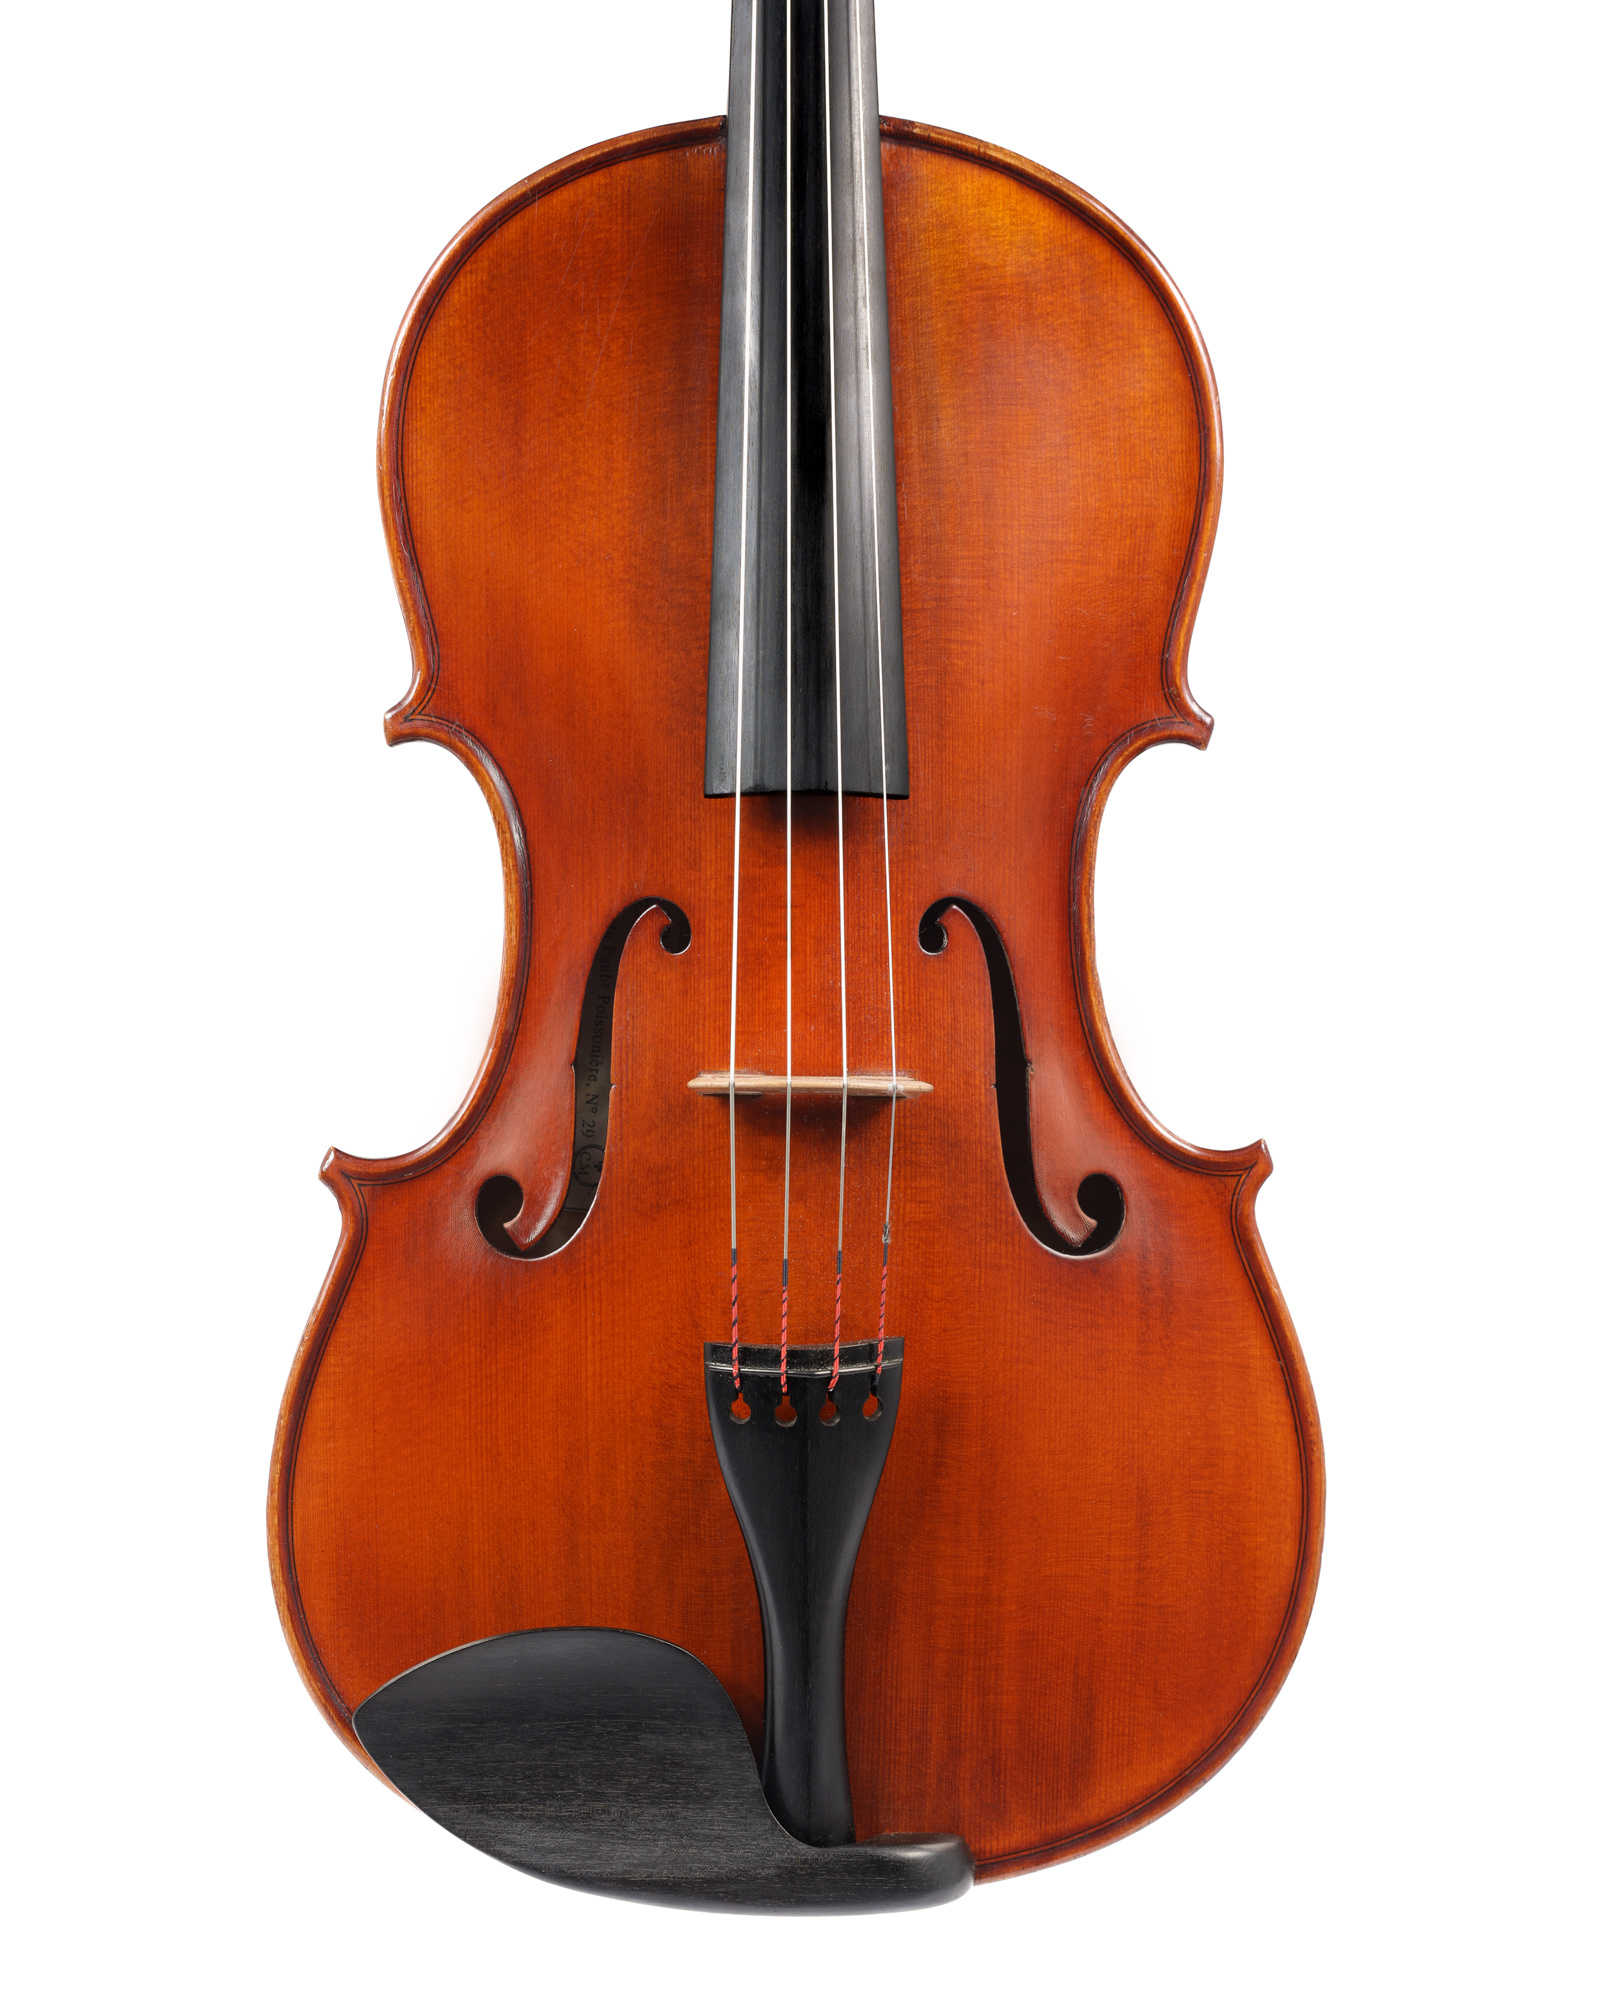 French Ch. J.B COLLIN-MEZIN jr. 16.5" viola #76, Paris, FRANCE, 1922, (signed internally)